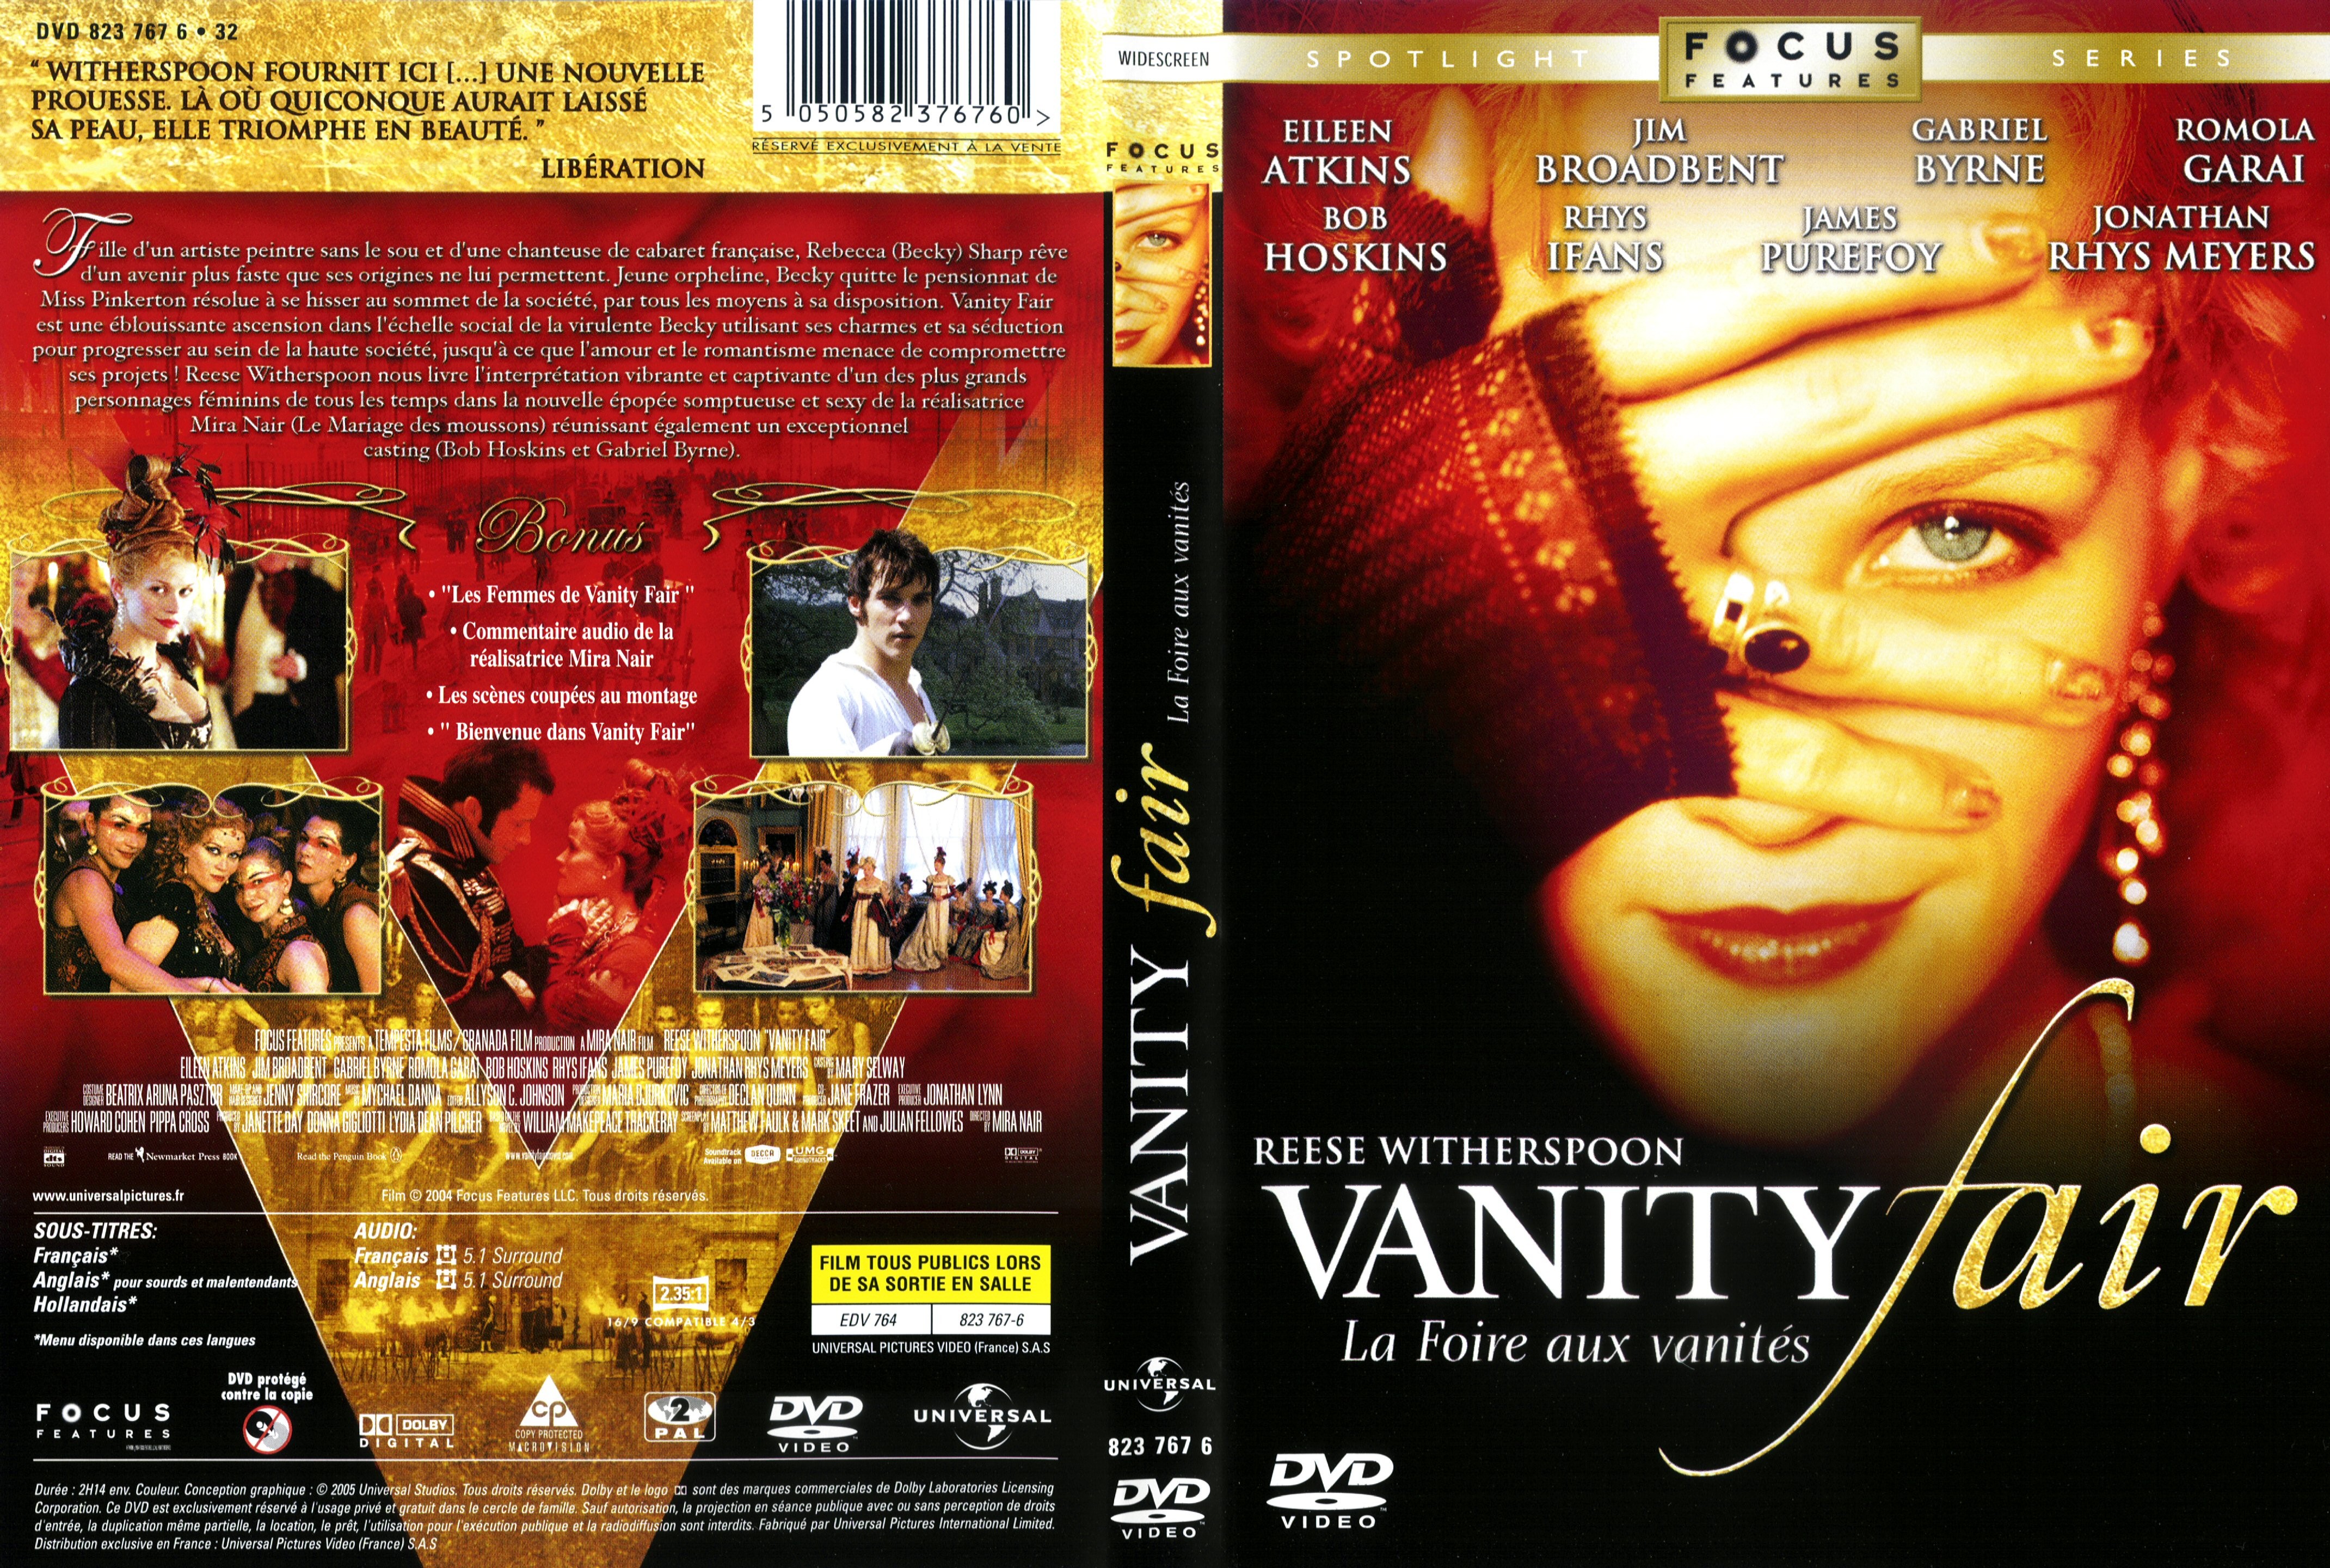 Jaquette DVD Vanity fair